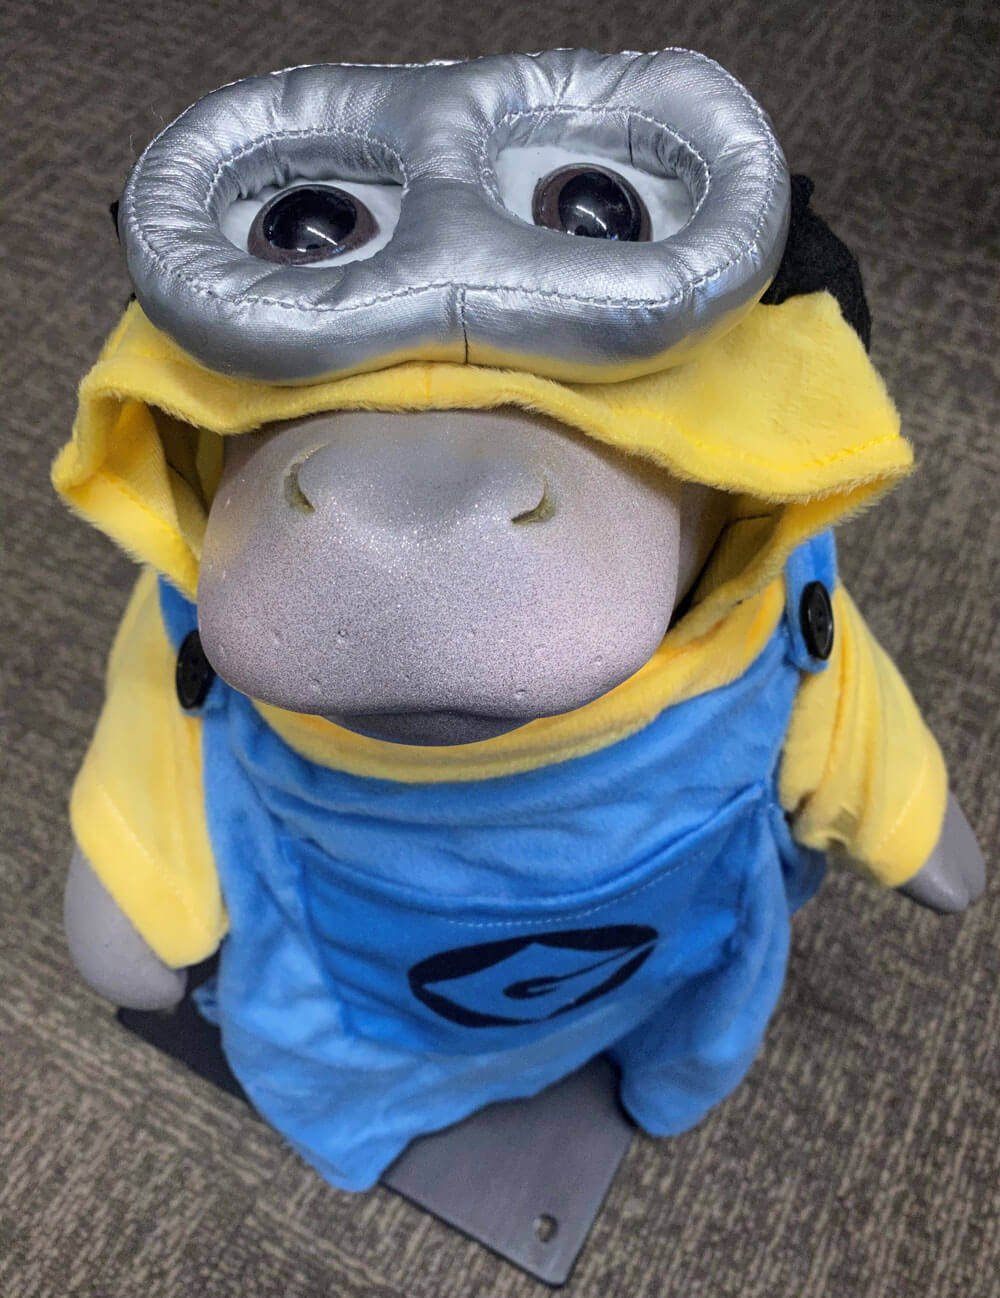 hippo in a costume